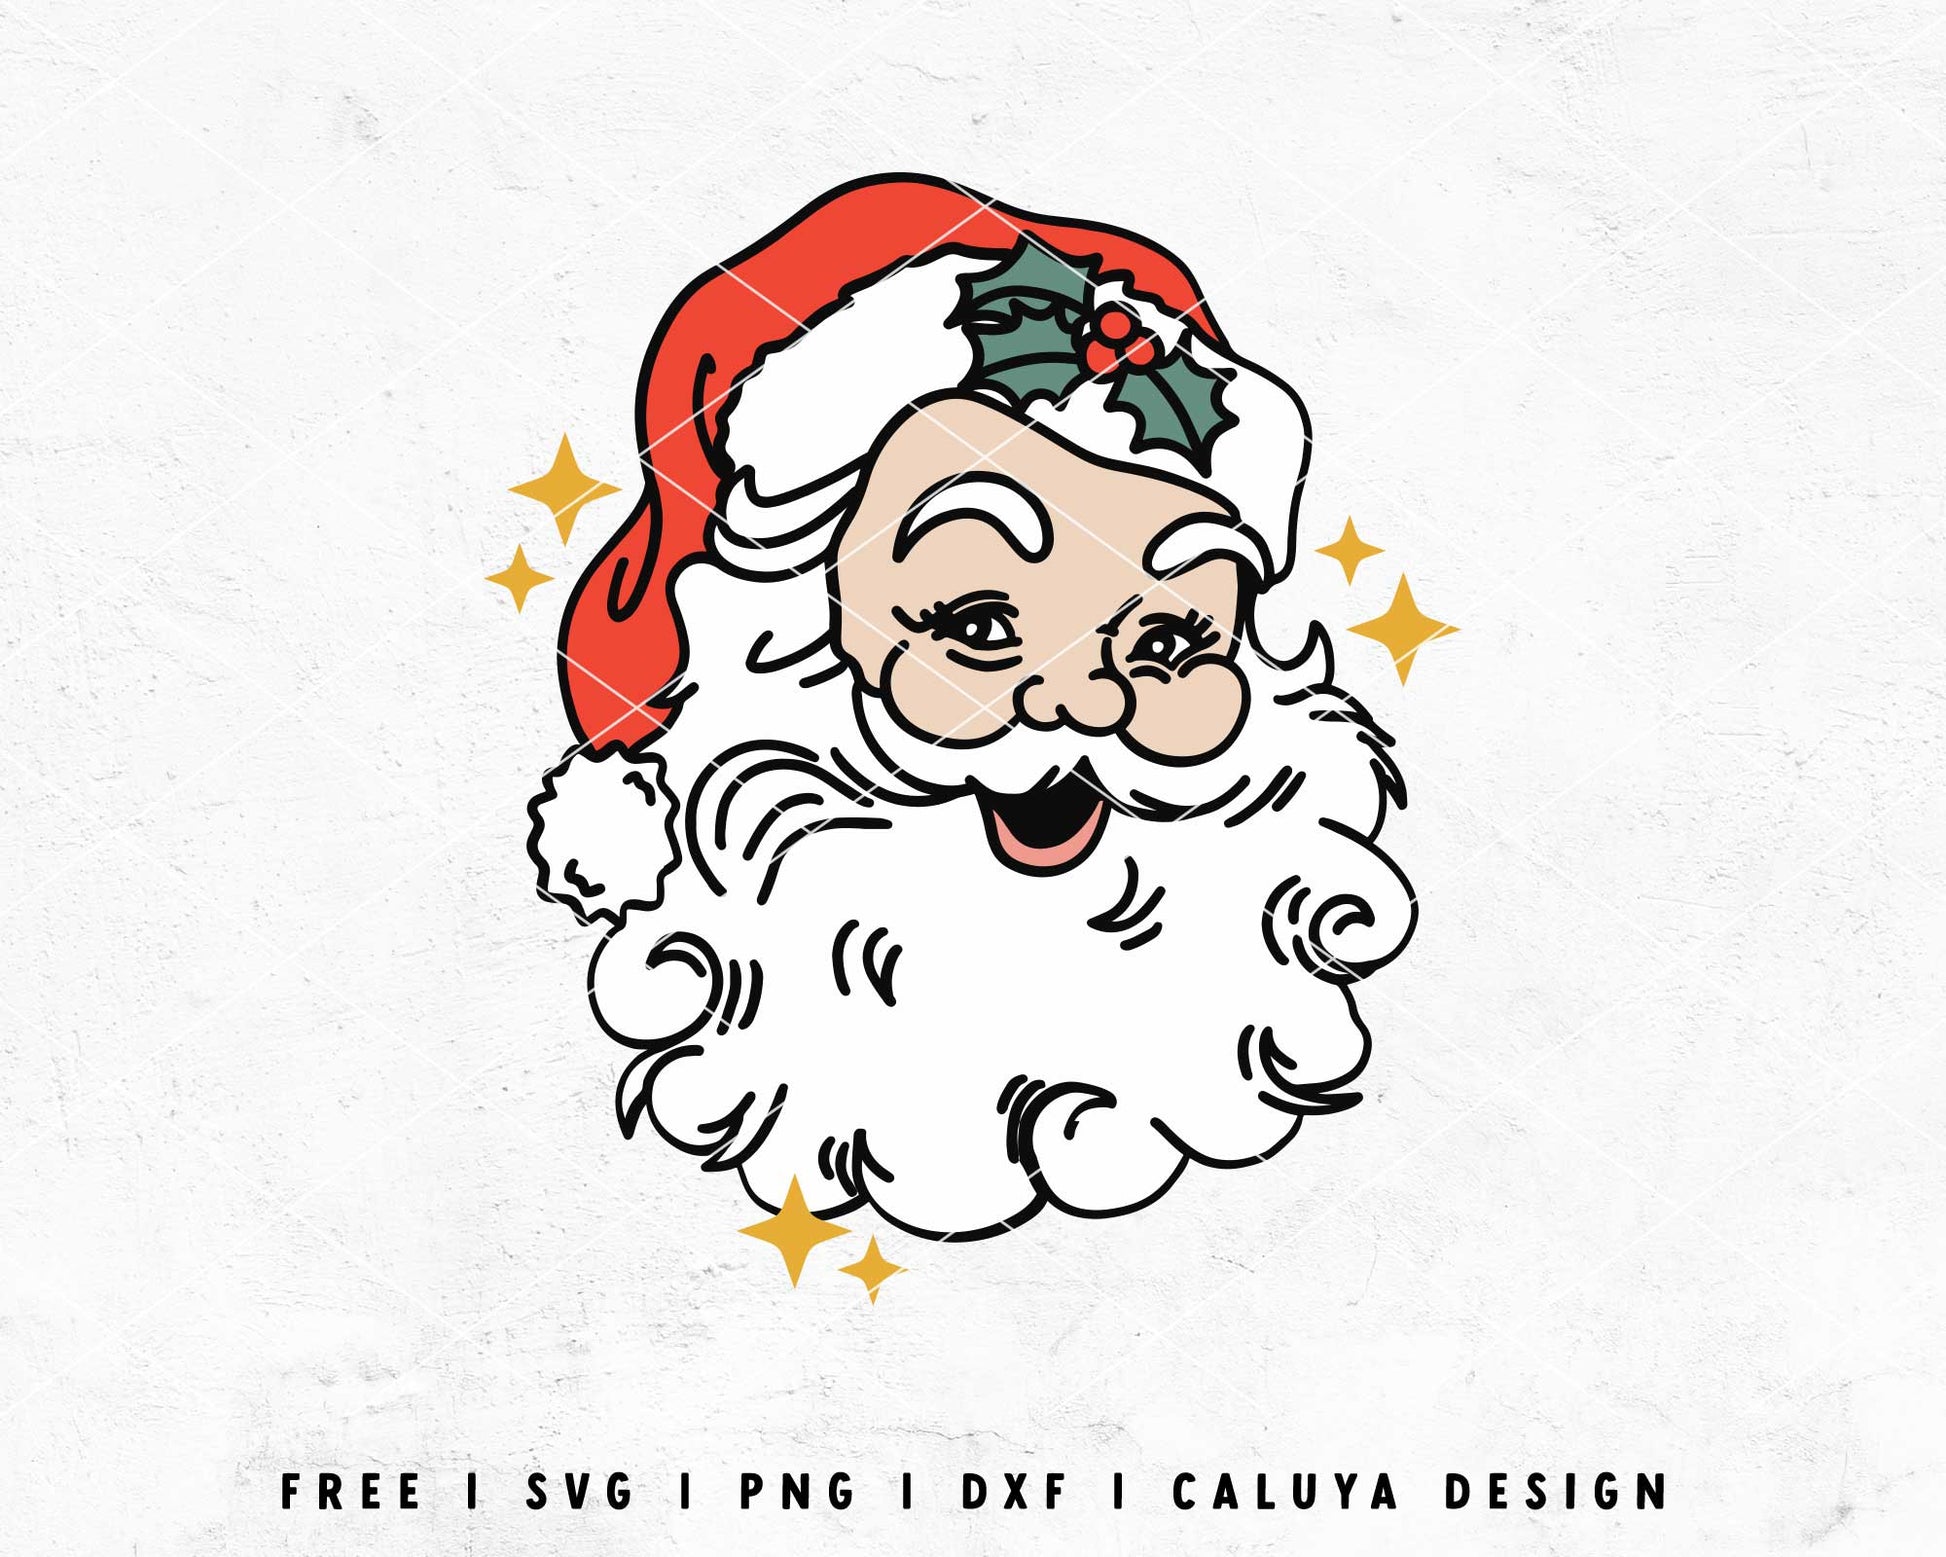 FREE Vintage Santa SVG | Full-Color Retro Santa SVG Cut File for Cricut, Cameo Silhouette | Free SVG Cut File